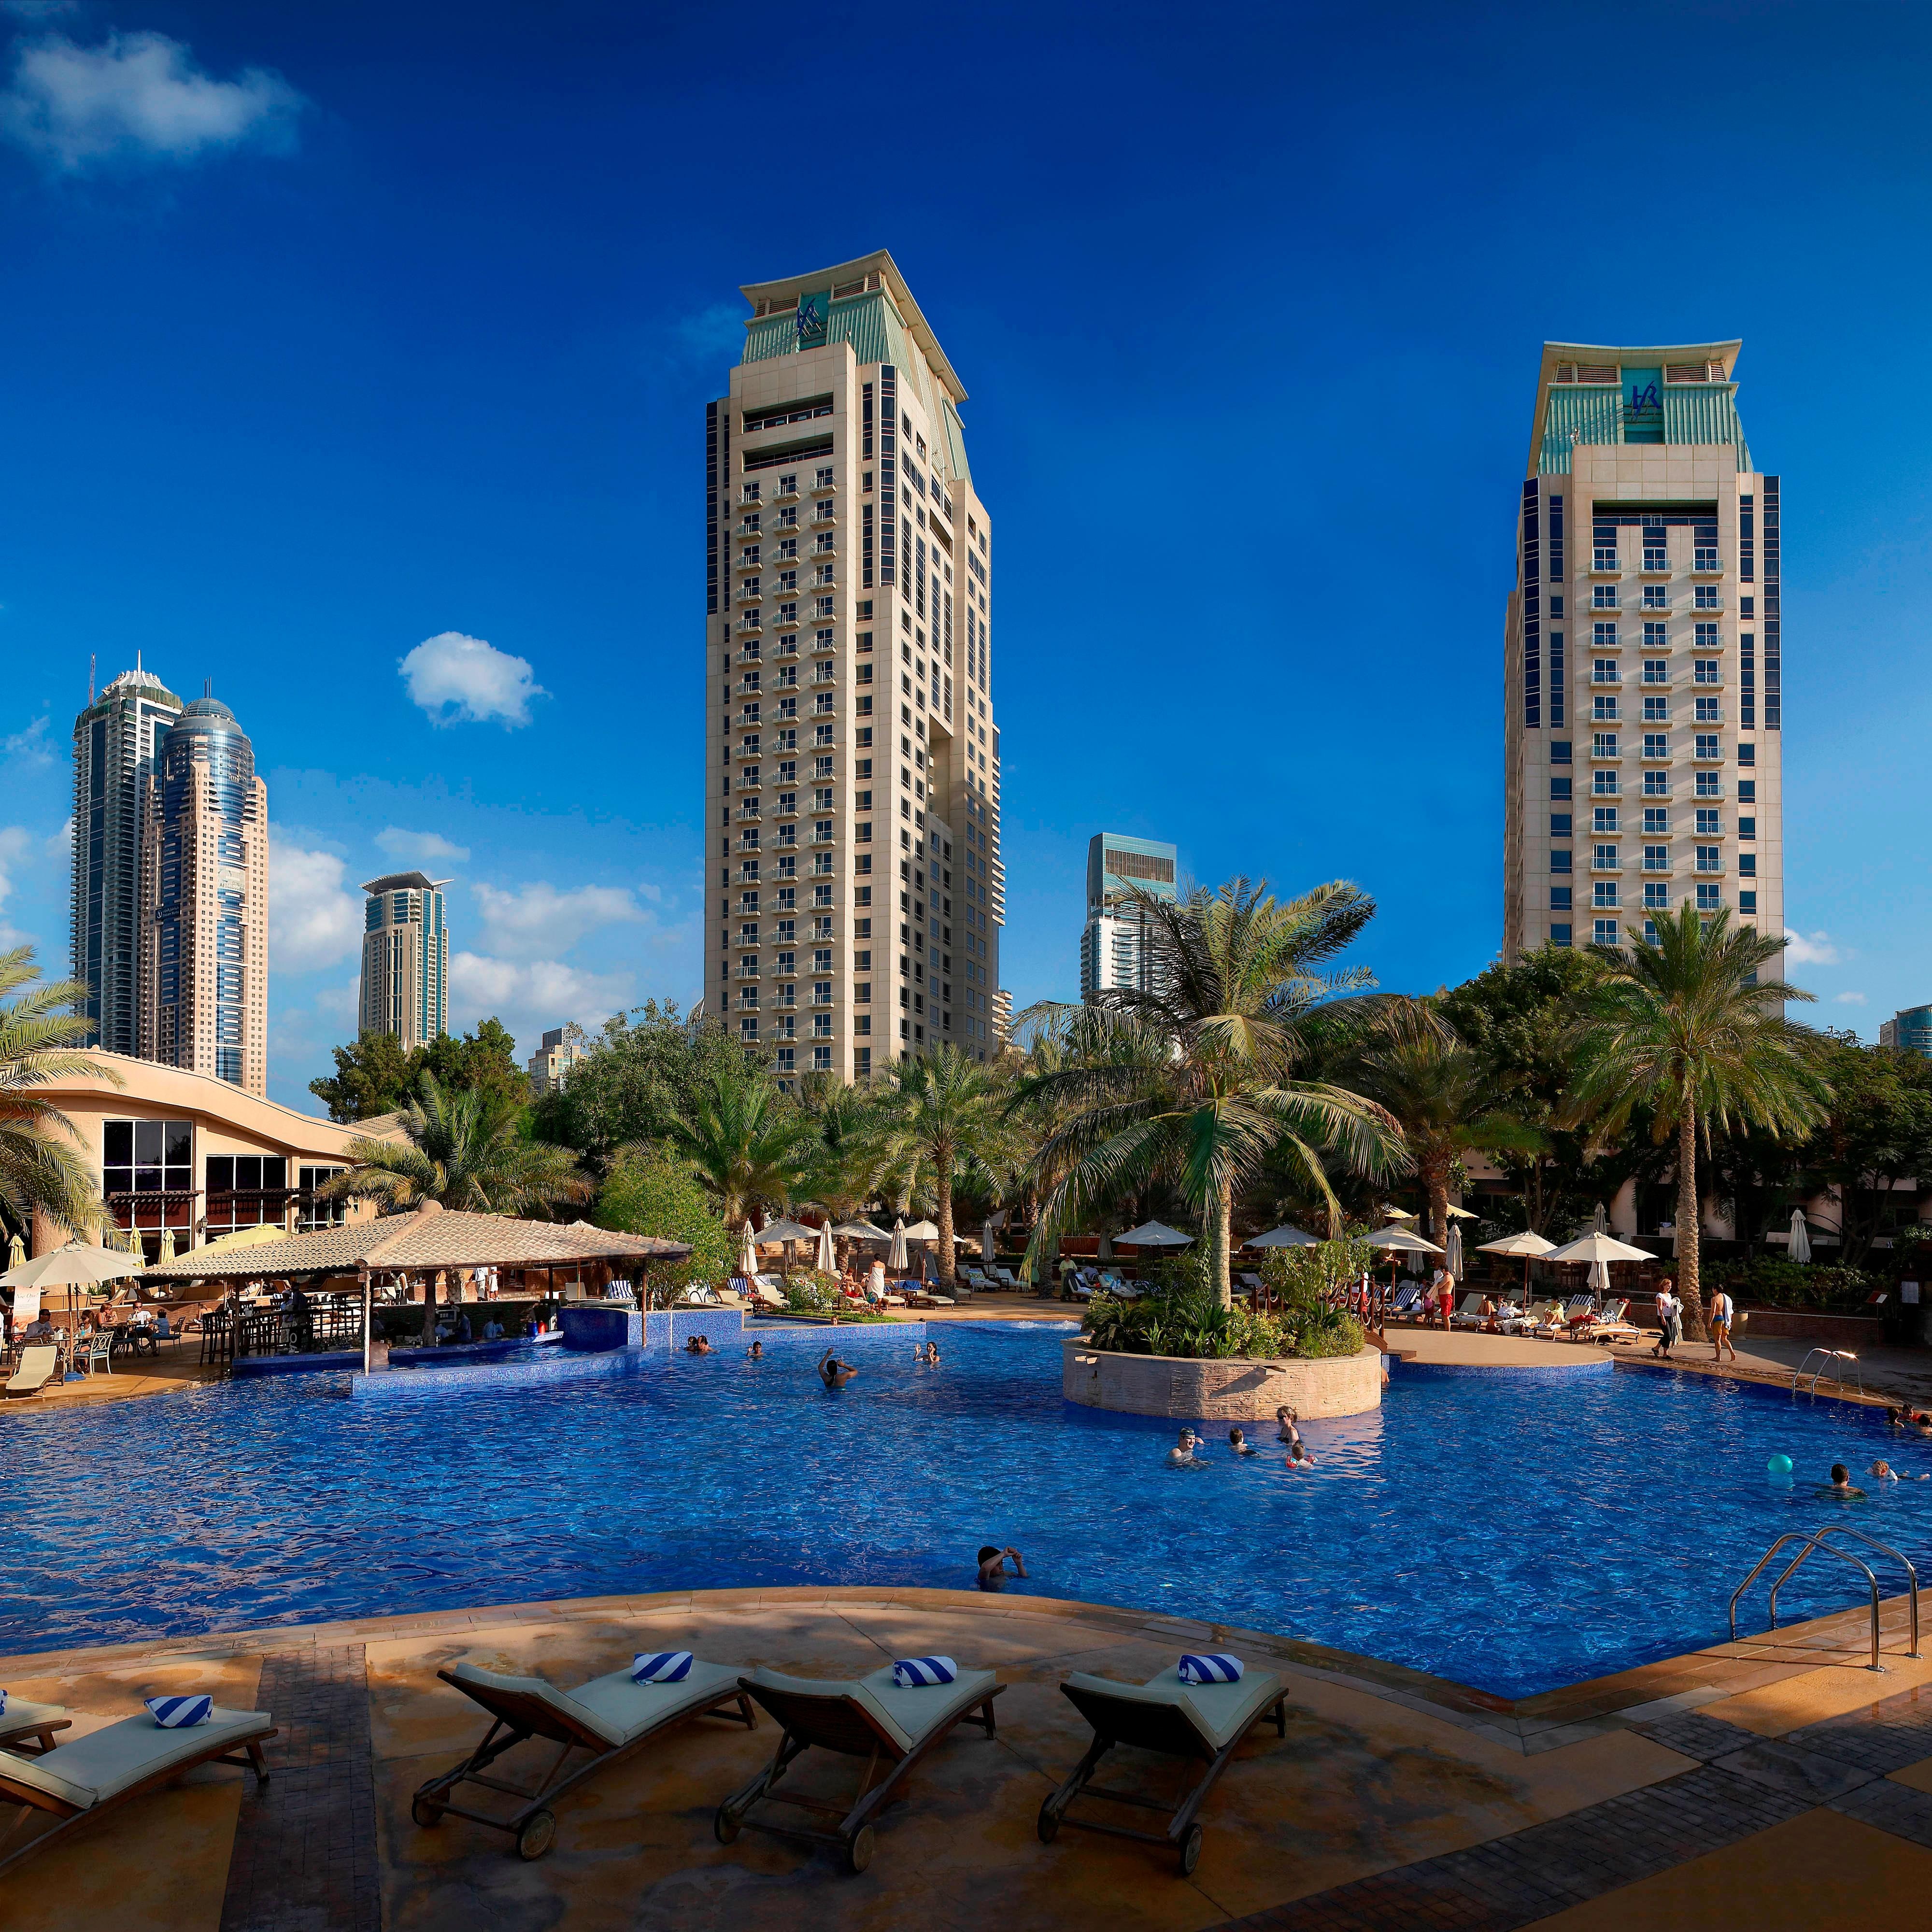 Jumeirah Beach hotel with pool